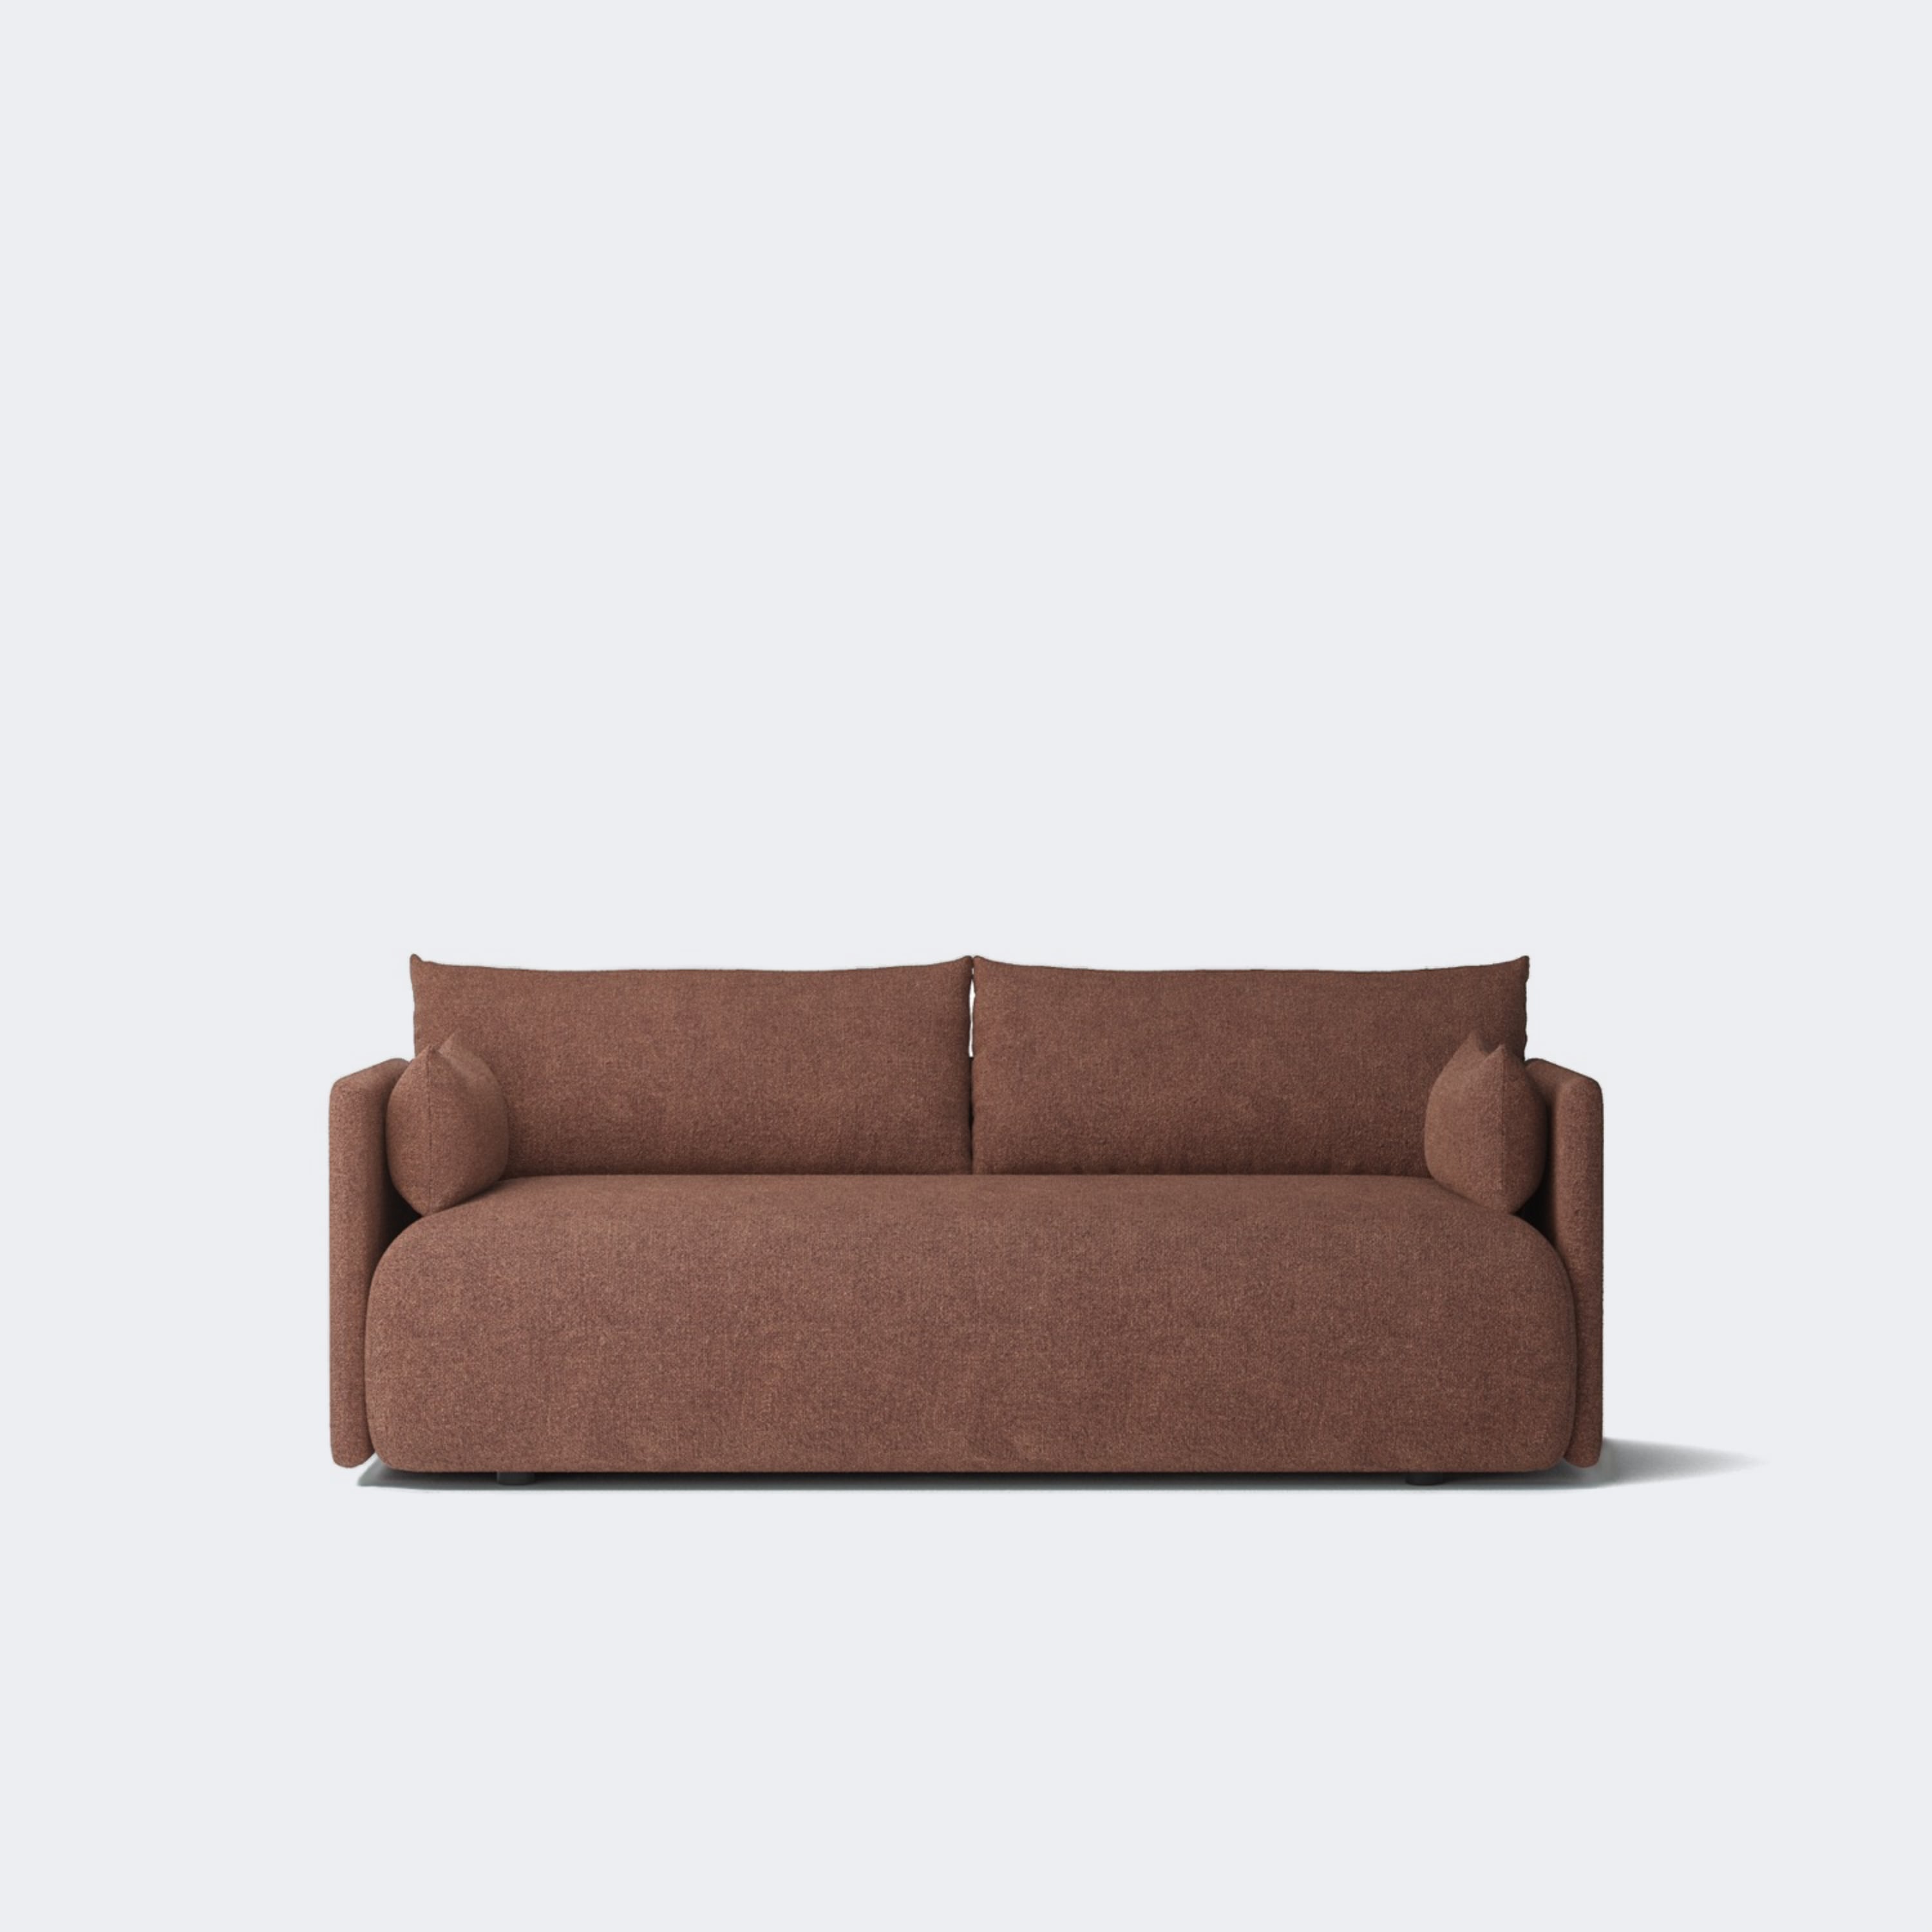 Audo Copenhagen Offset Sofa, 2 Seater Made To Order (12-14 Weeks) Audo Boucle #08 (Bordeaux) - KANSO